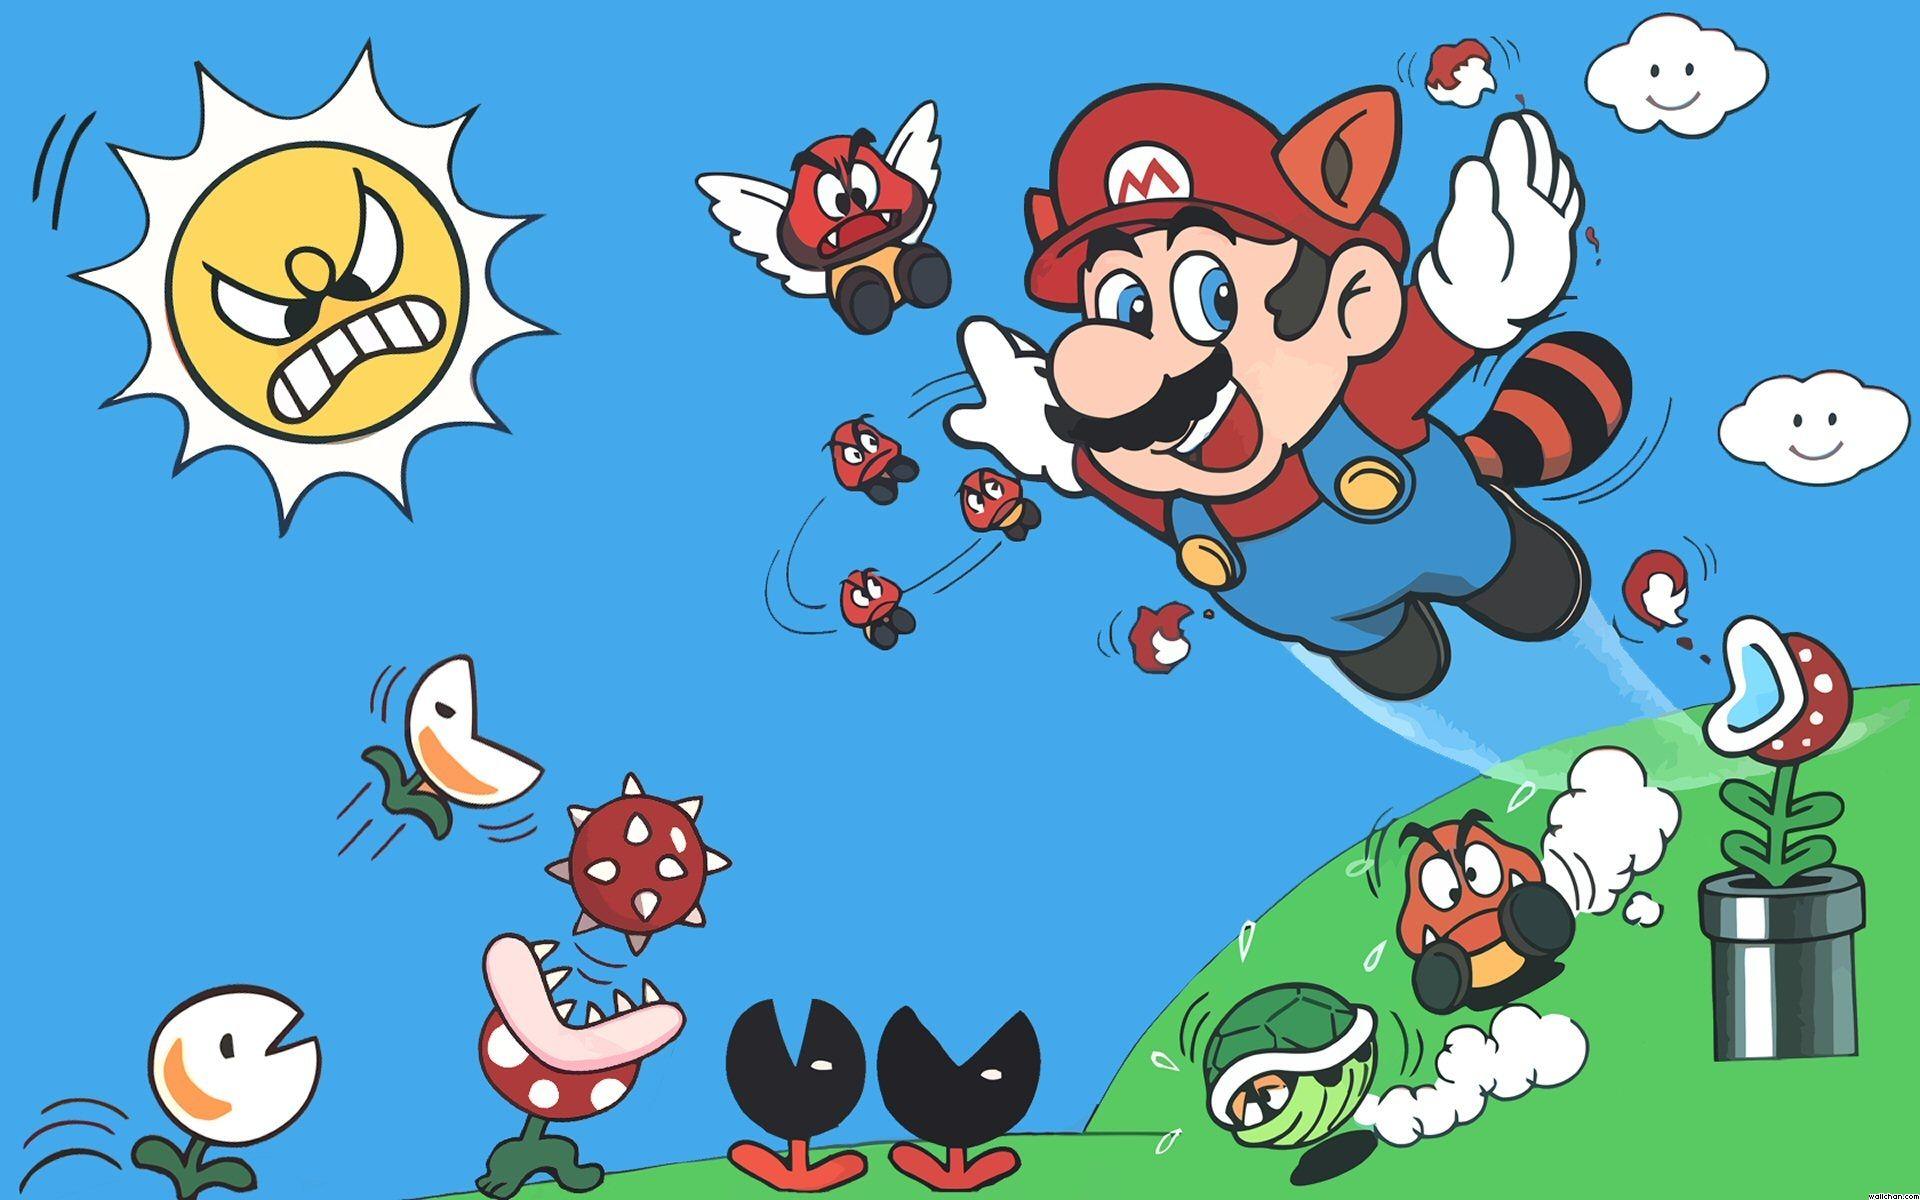 Games Wallpaper: Super Mario Wallpaper 8 Bit Wallpaper with High